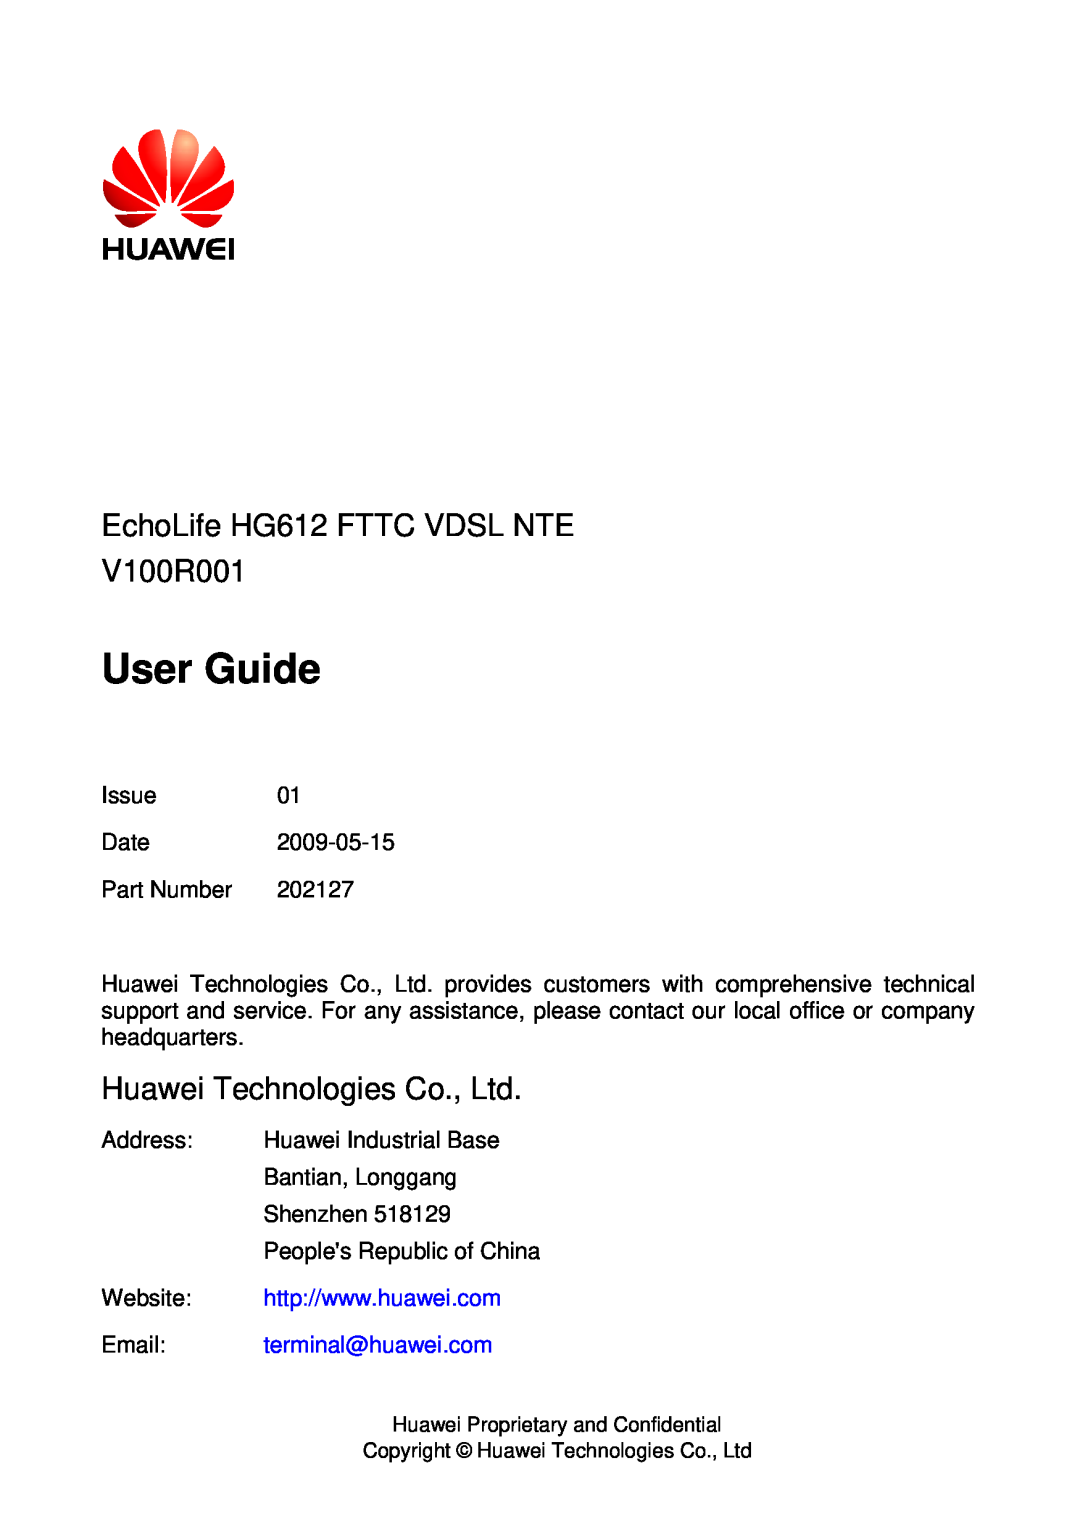 Huawei HG612FTTC VDSL NTE manual EchoLife HG612 FTTC VDSL NTE V100R001, User Guide, terminal@huawei.com 